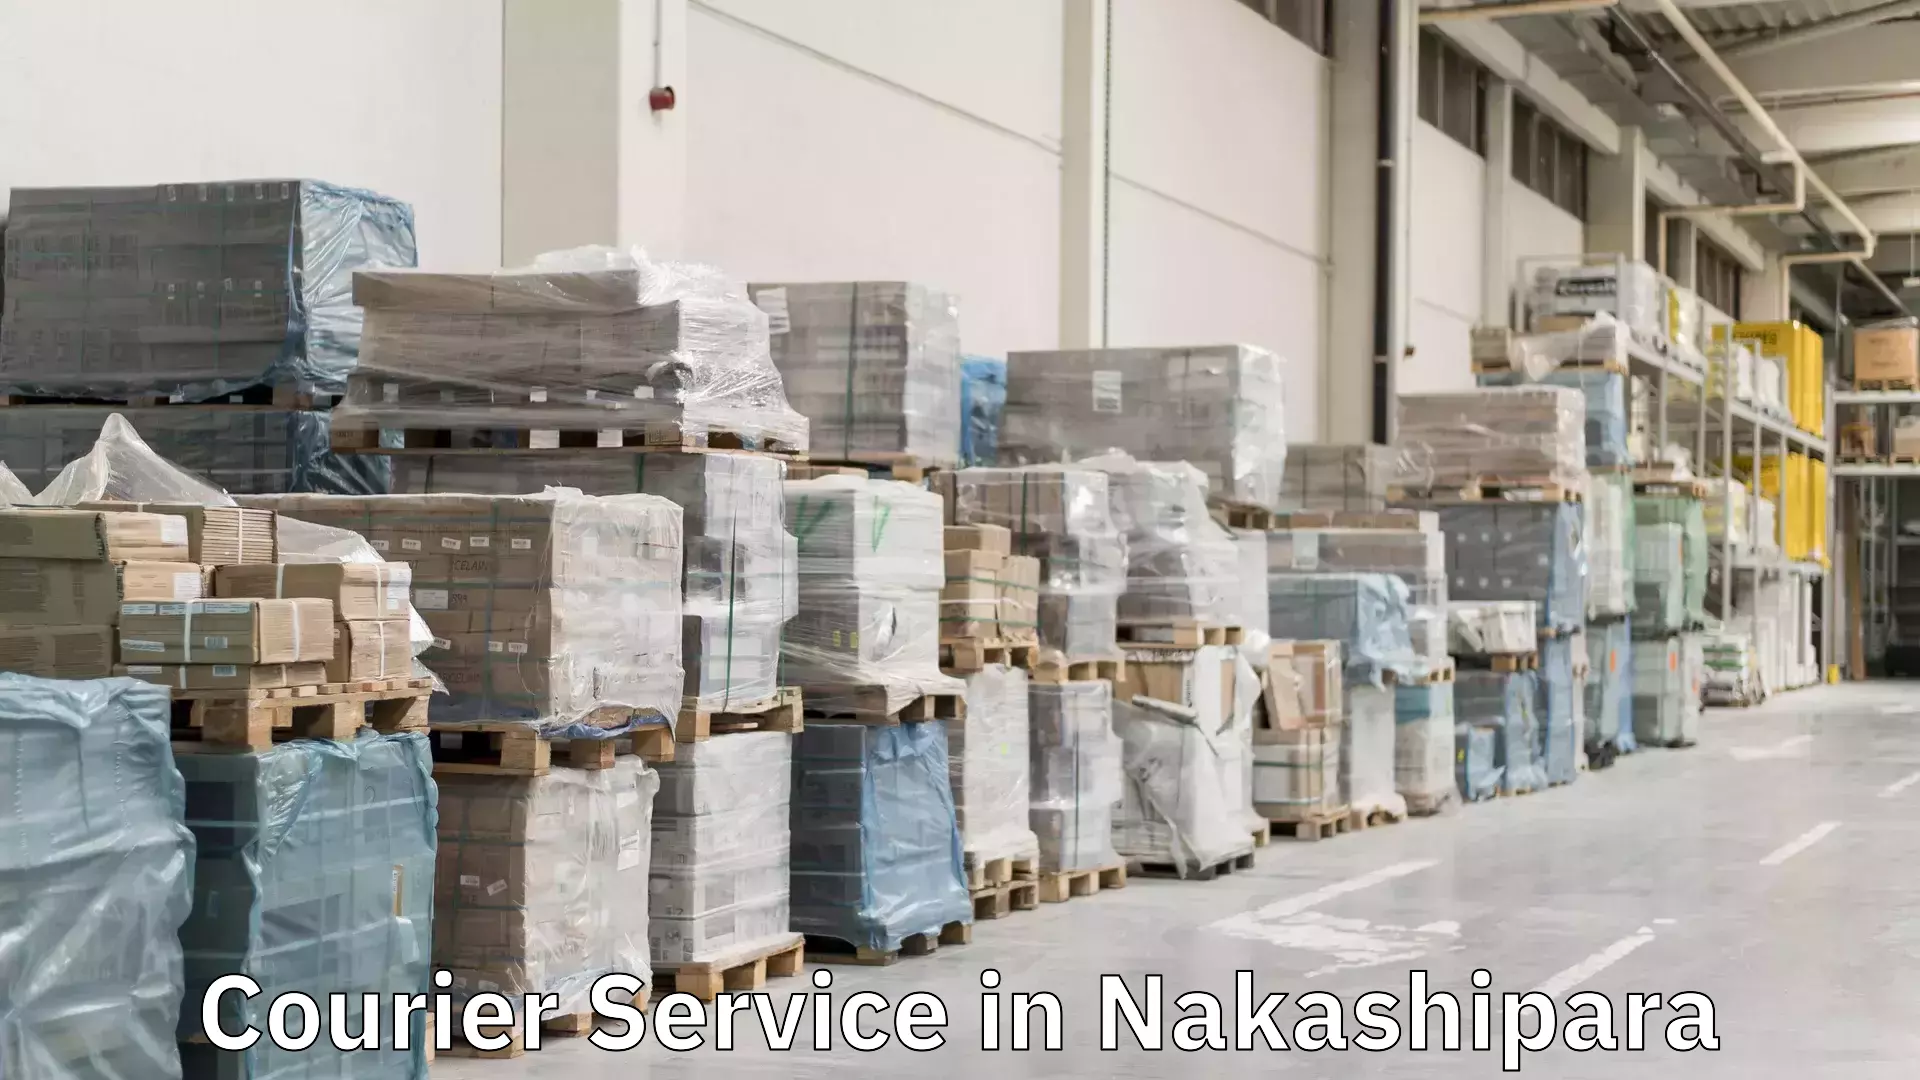 Comprehensive logistics in Nakashipara